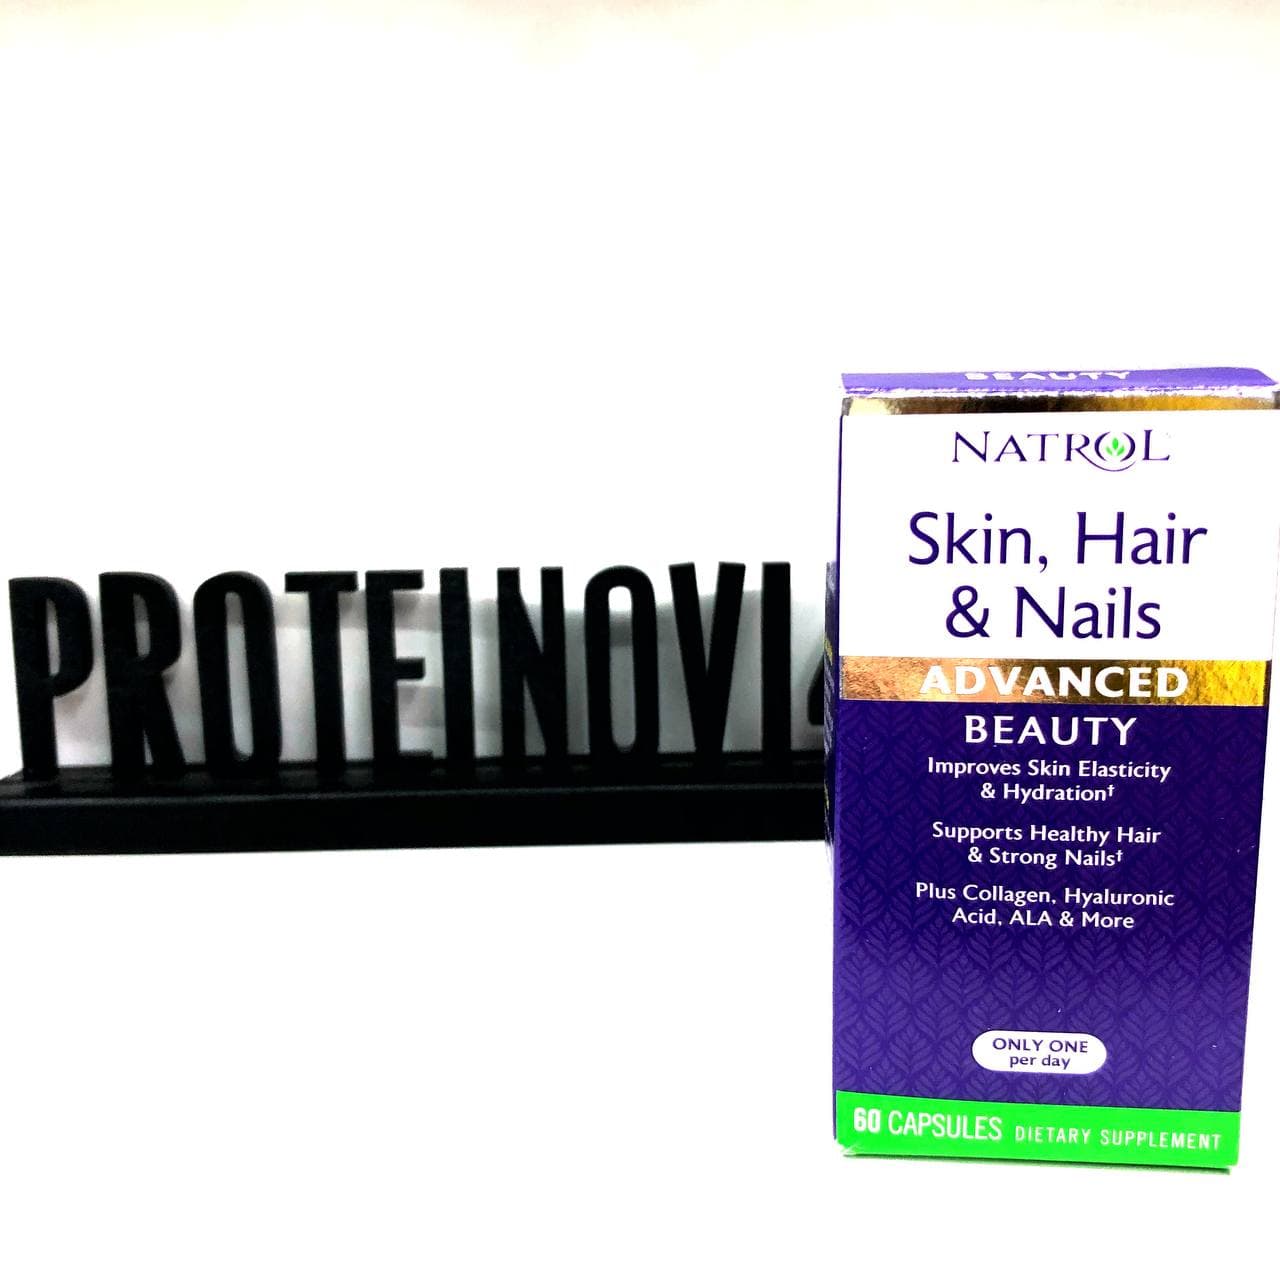 Natrol Skin Hair Nails one per day 60caps - Proteinovi4 Для кожи и волос